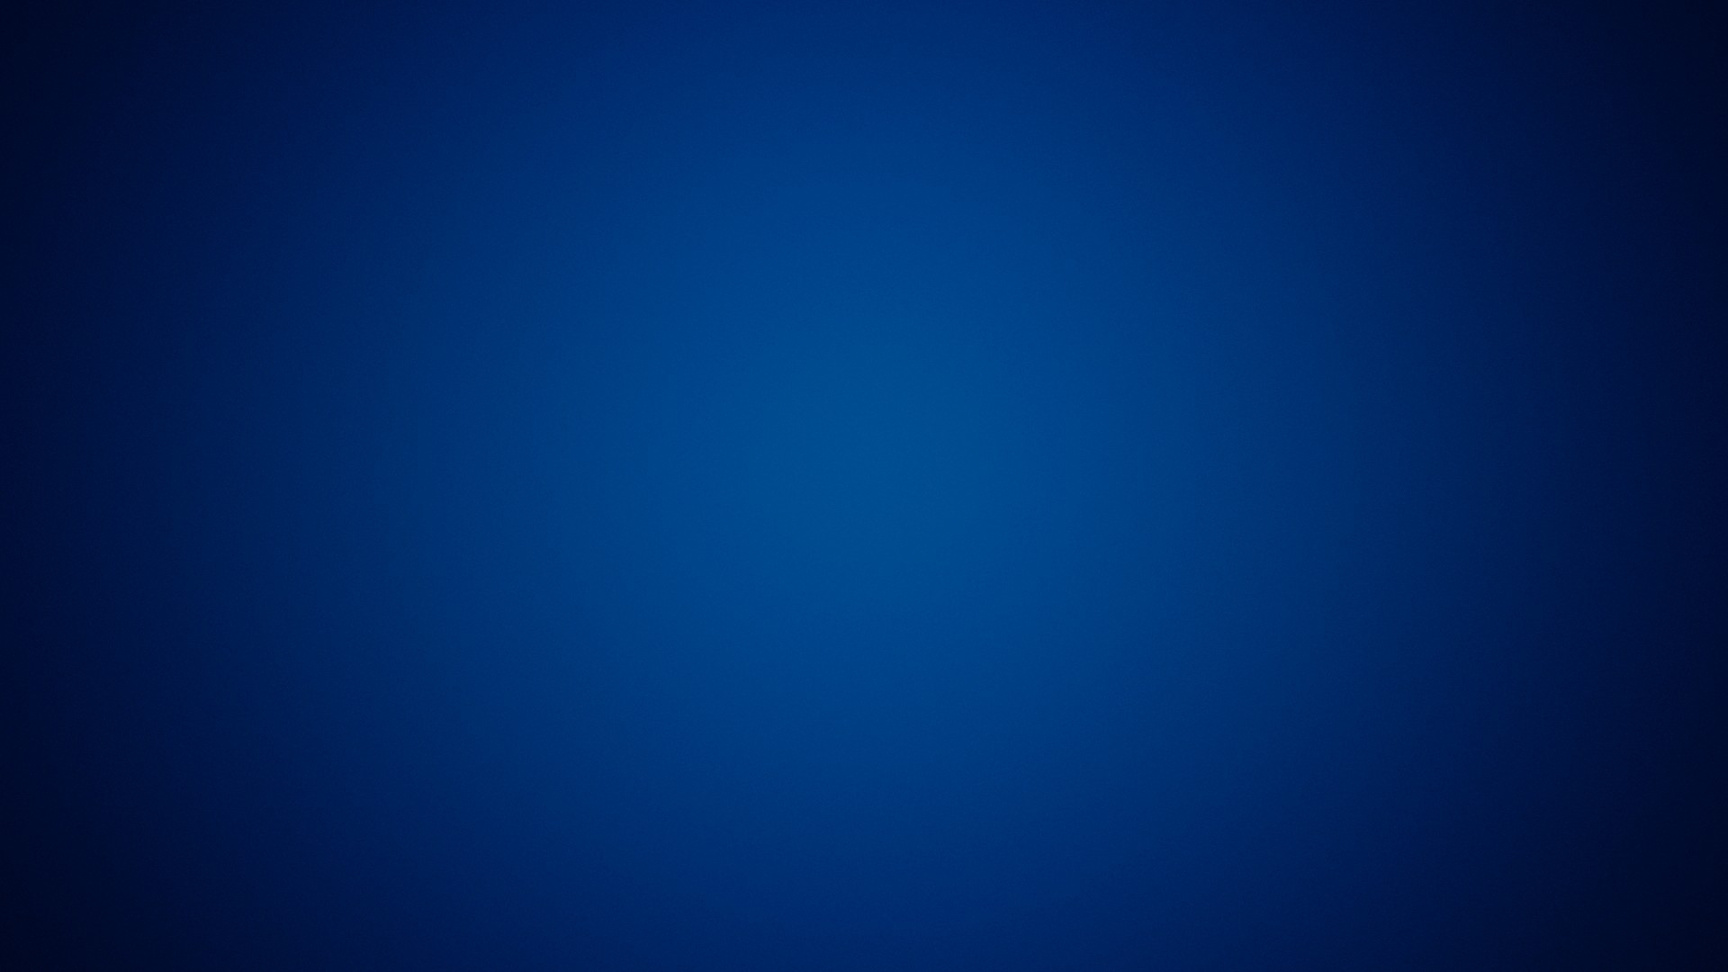 HD blue gradient background/wallpaper